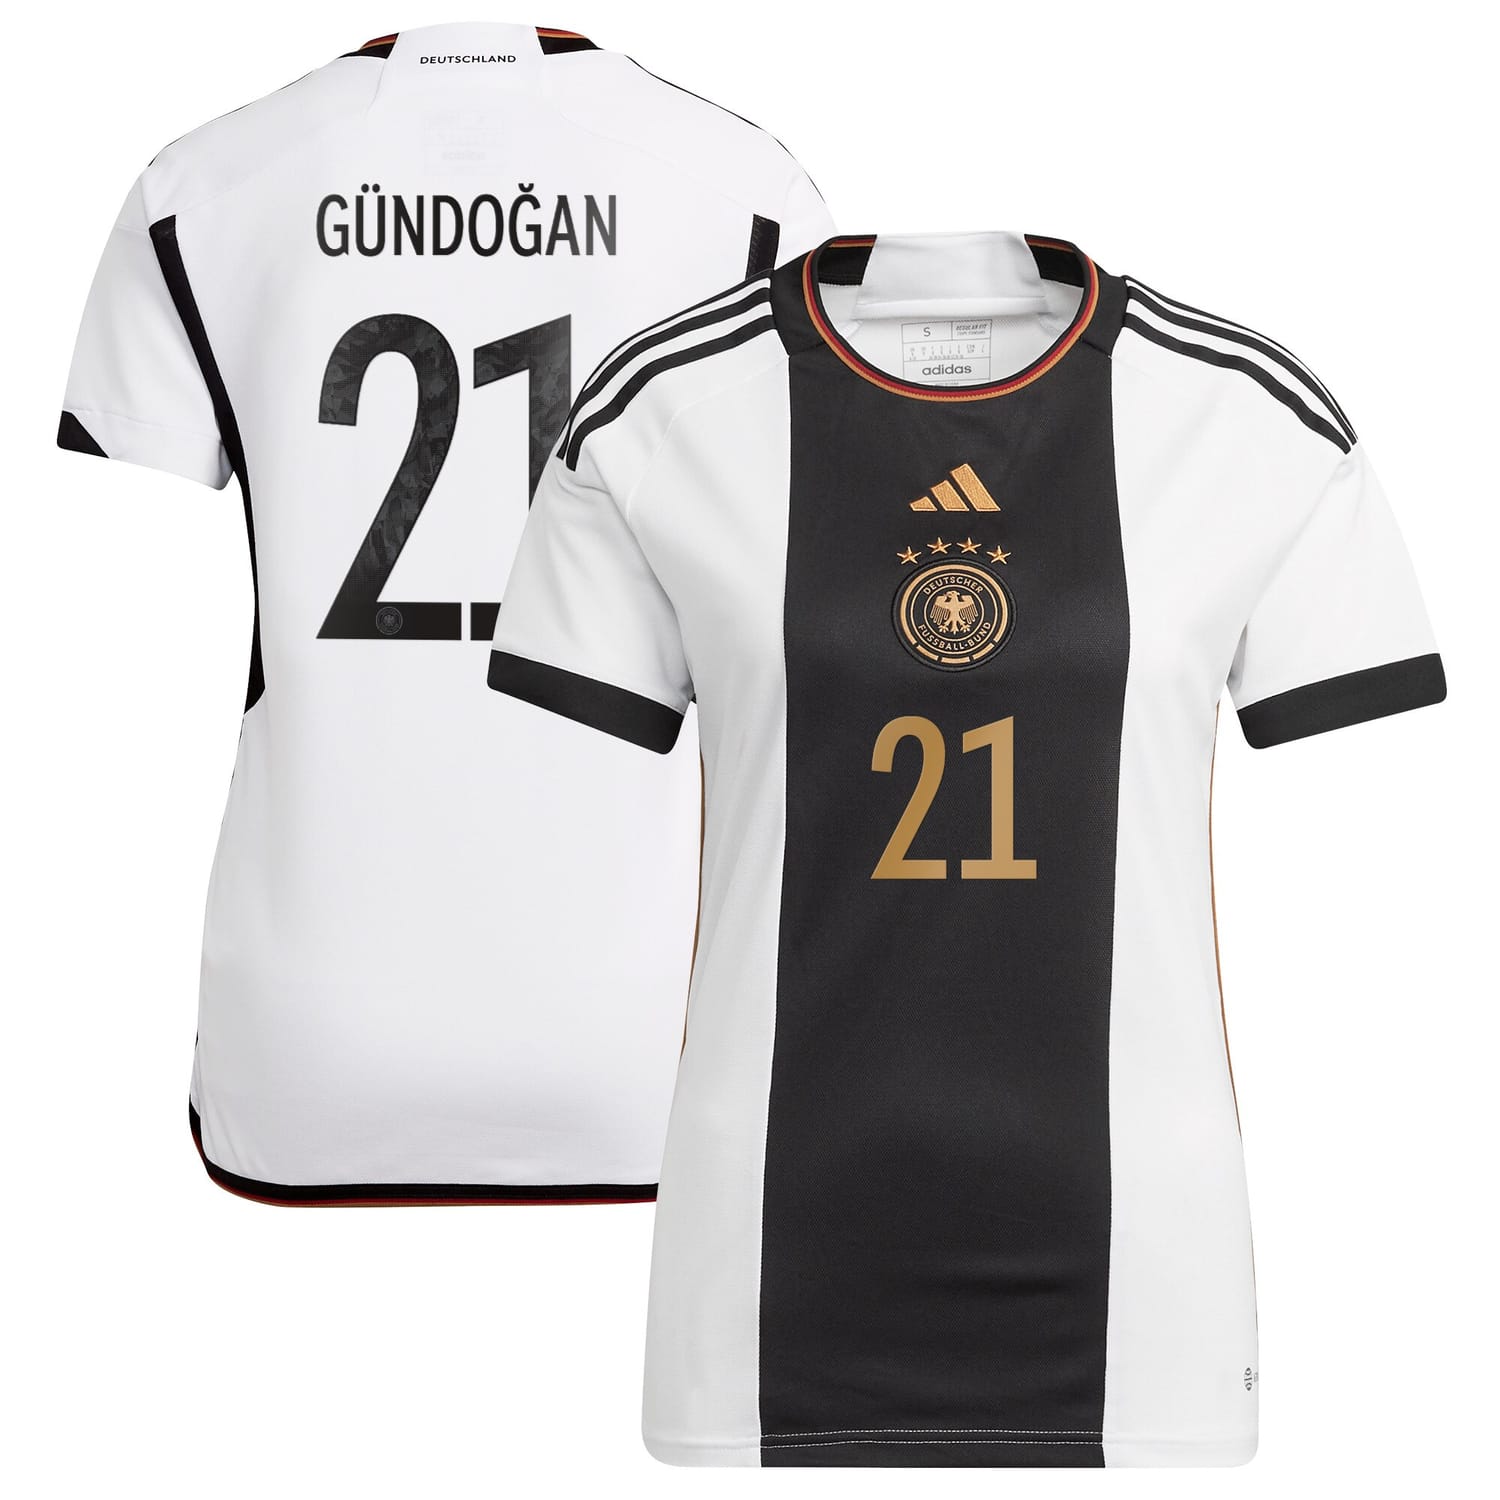 Germany National Team Home Jersey Shirt player Ilkay Gündogan 21 printing for Women